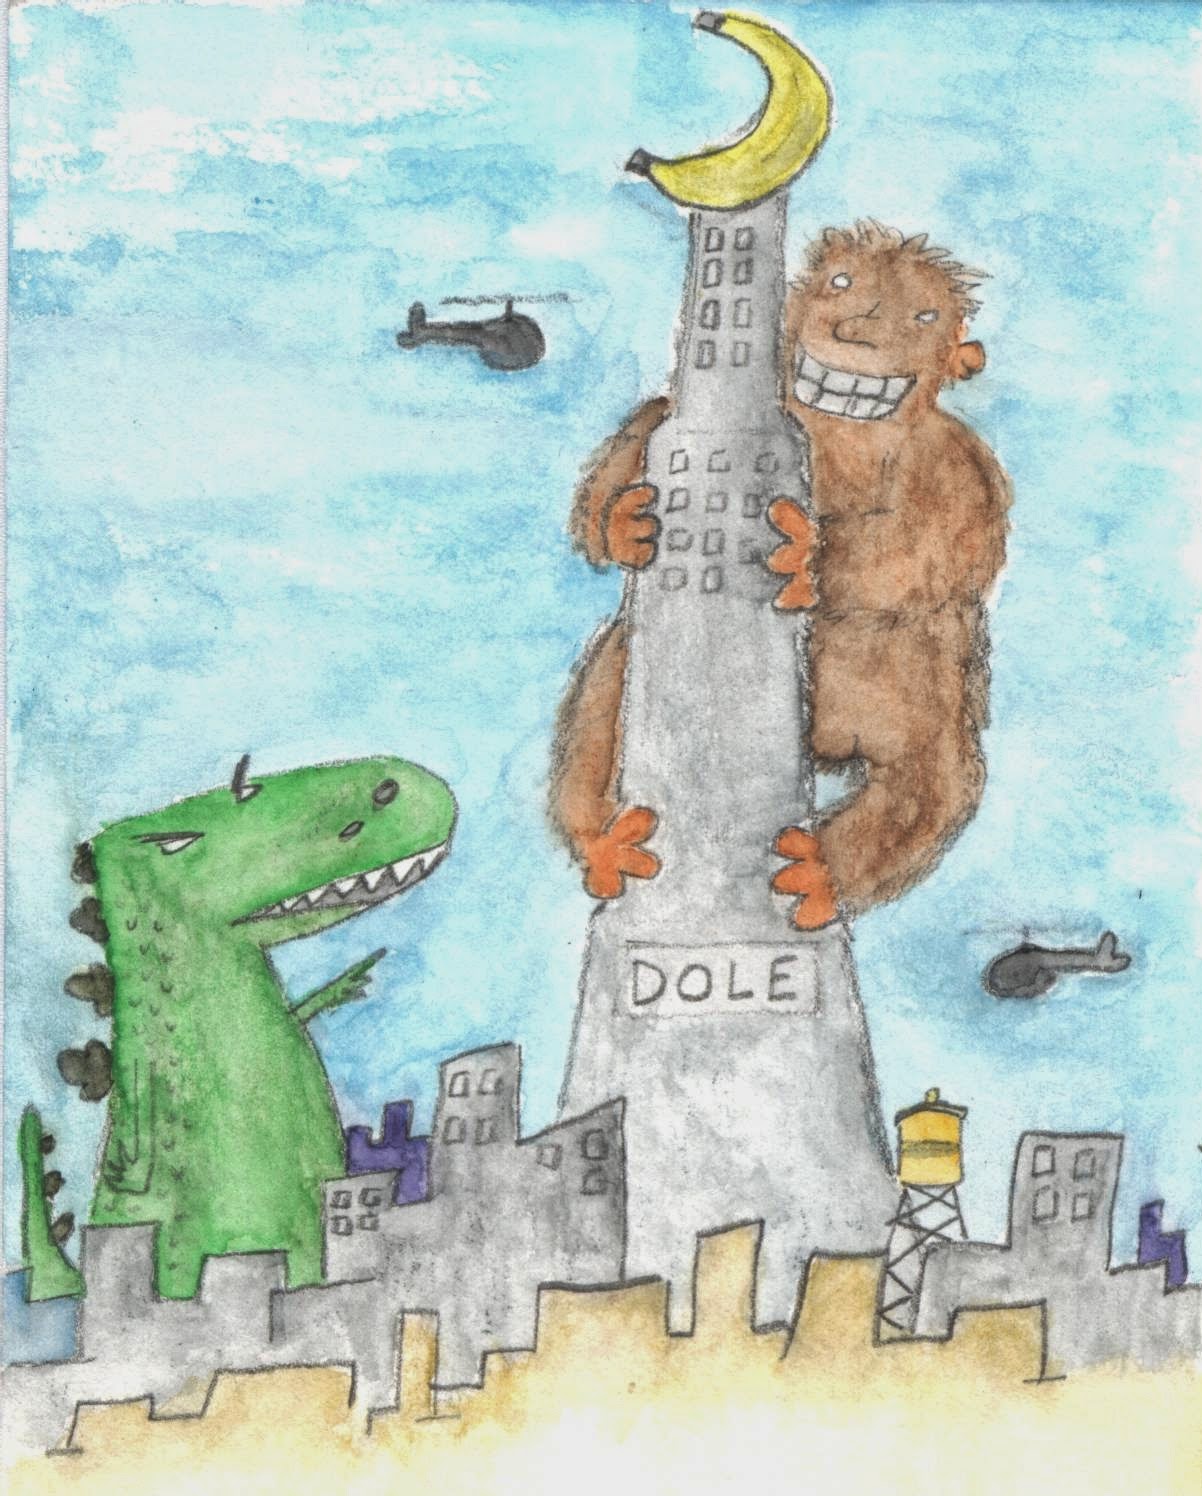 the sphinx: Godzilla vs. King Kong Cartoon (circa 2002)